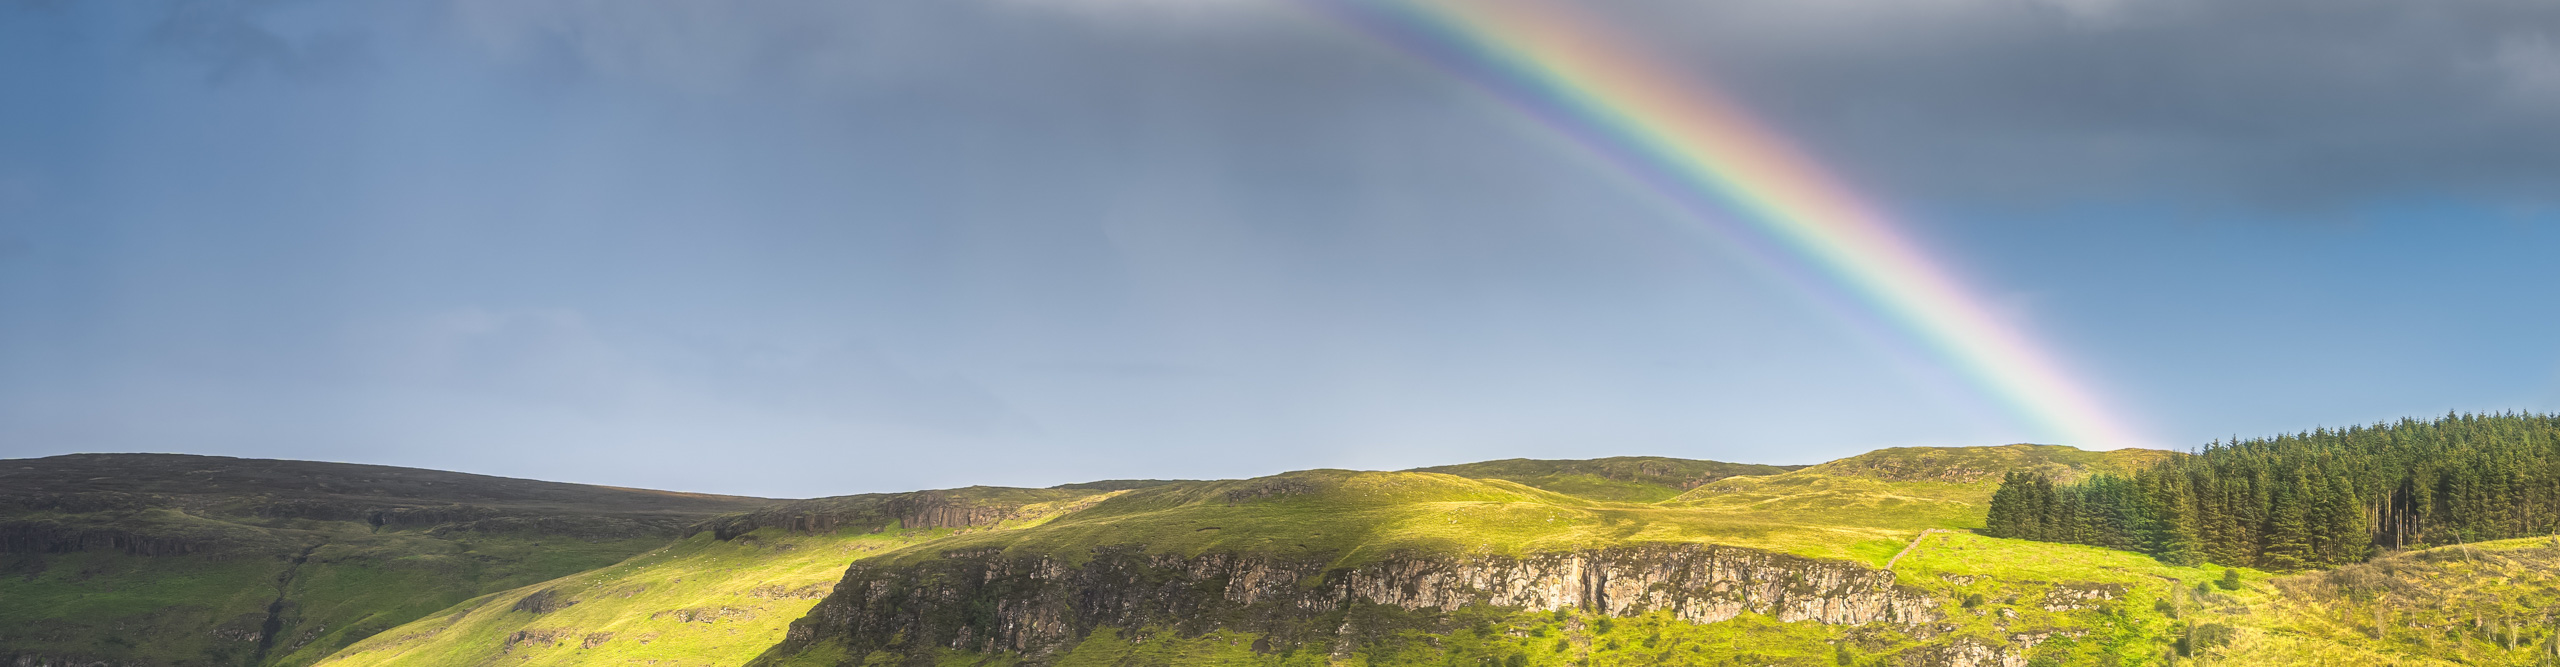 Rainbow ove hills in Ireland 